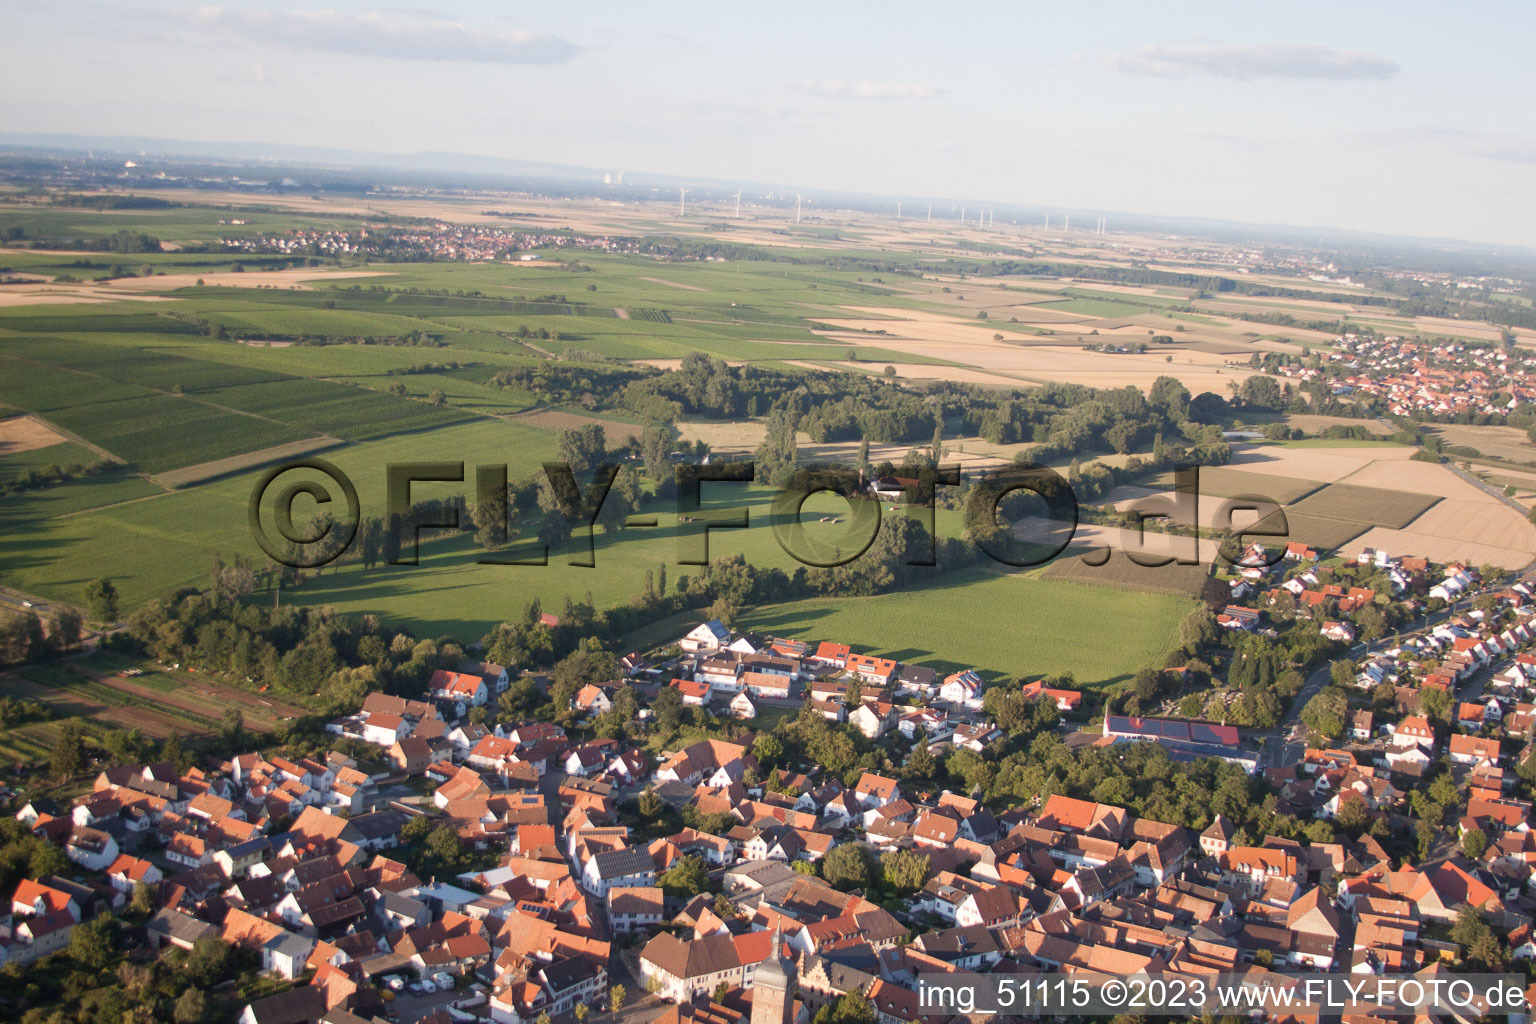 District Billigheim in Billigheim-Ingenheim in the state Rhineland-Palatinate, Germany from the plane